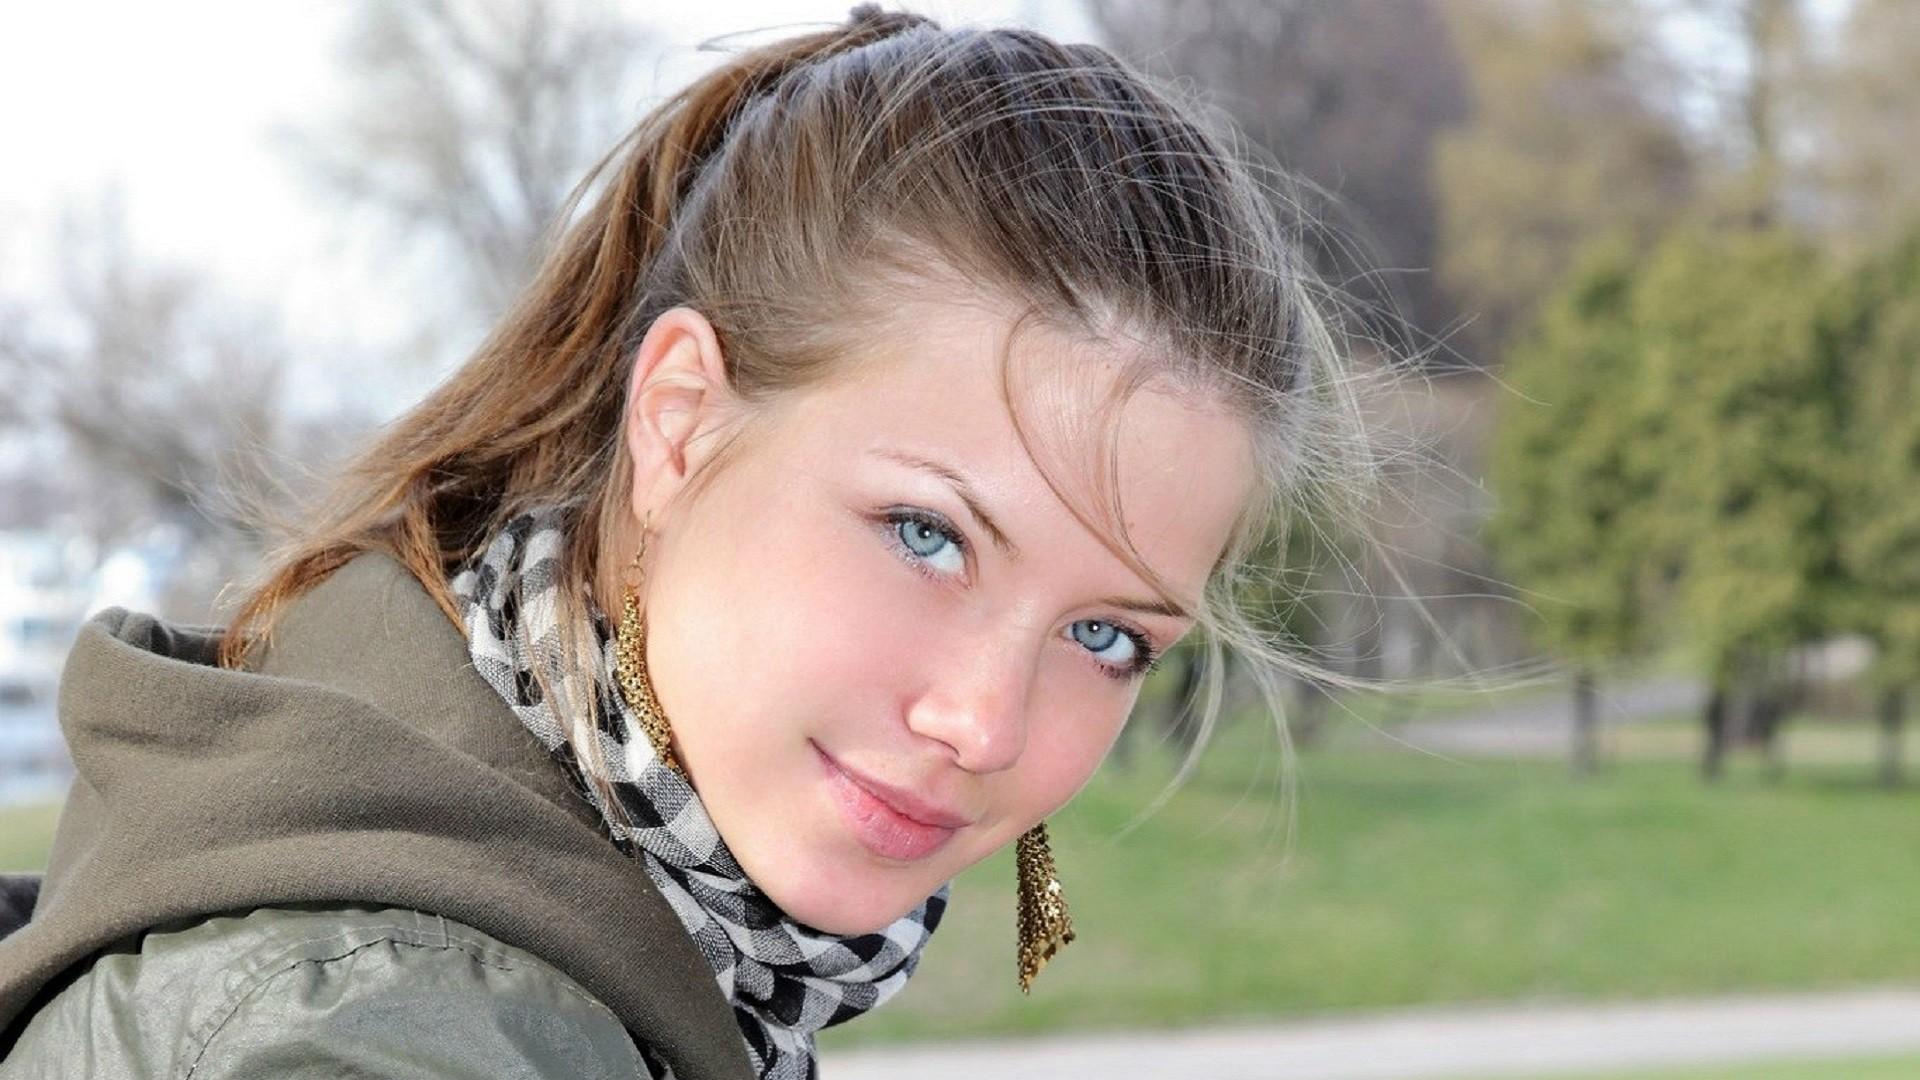 Russian Teen Nastya Model